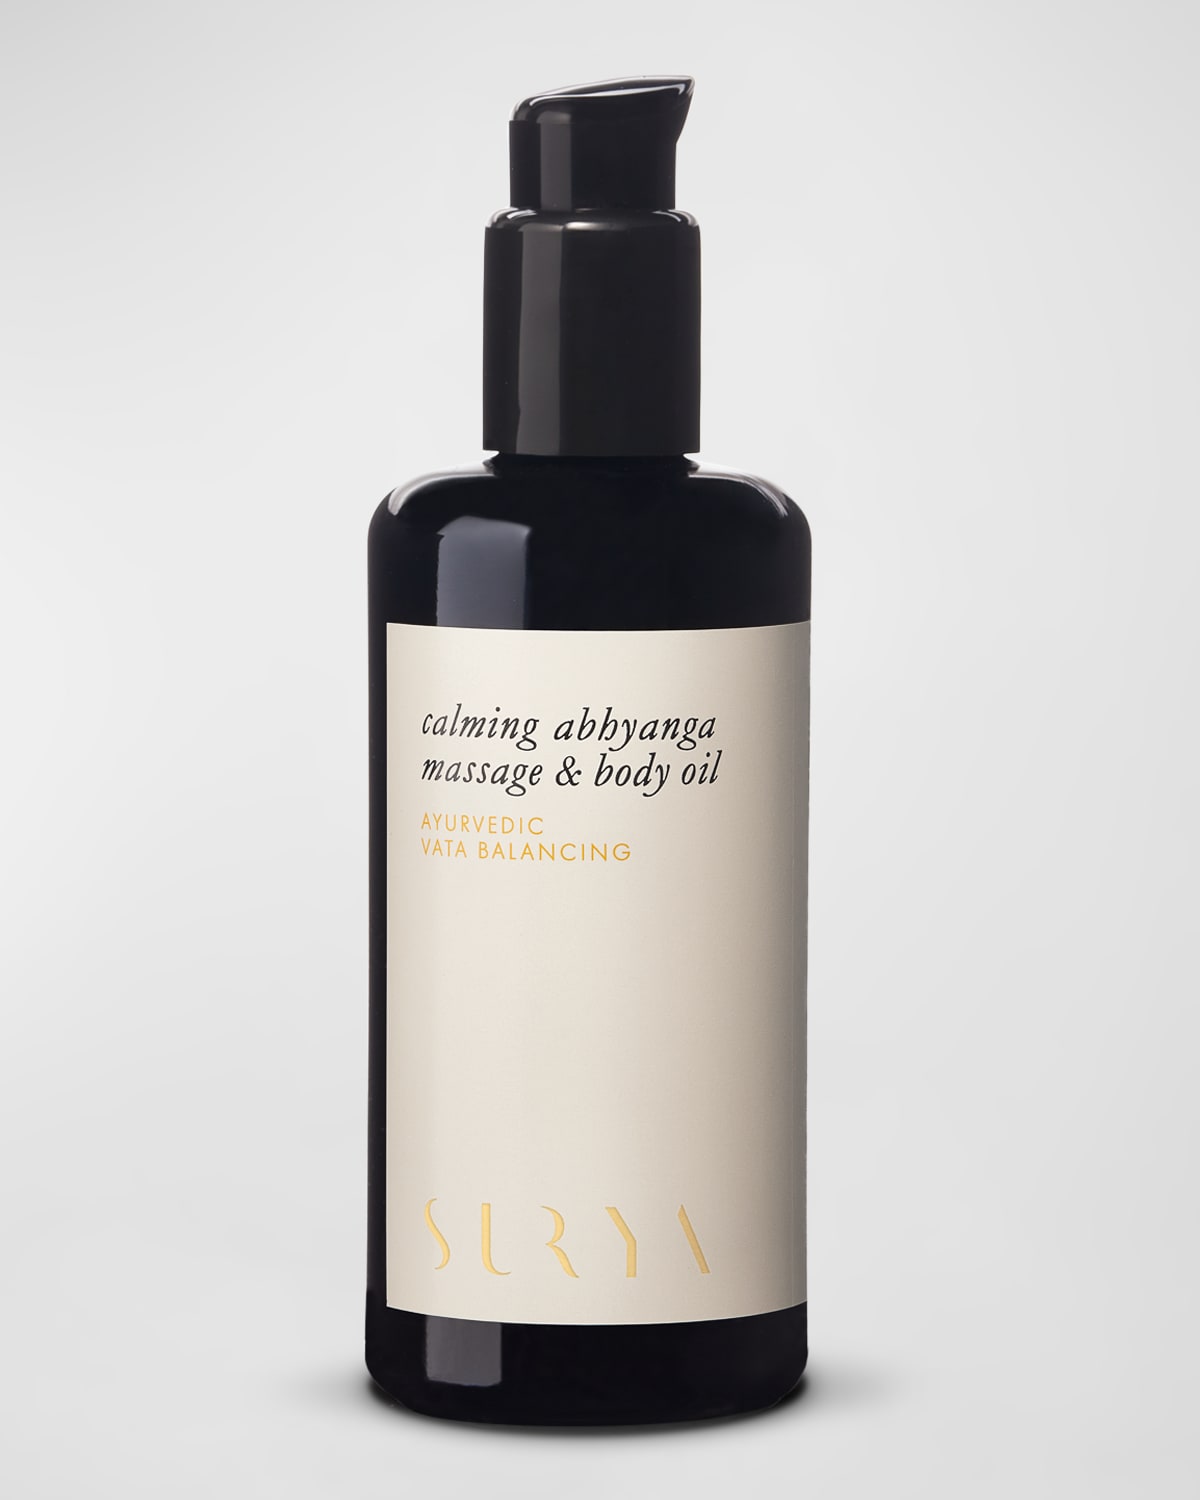 Calming Abhyanga Massage Body Oil, 6.7 oz.